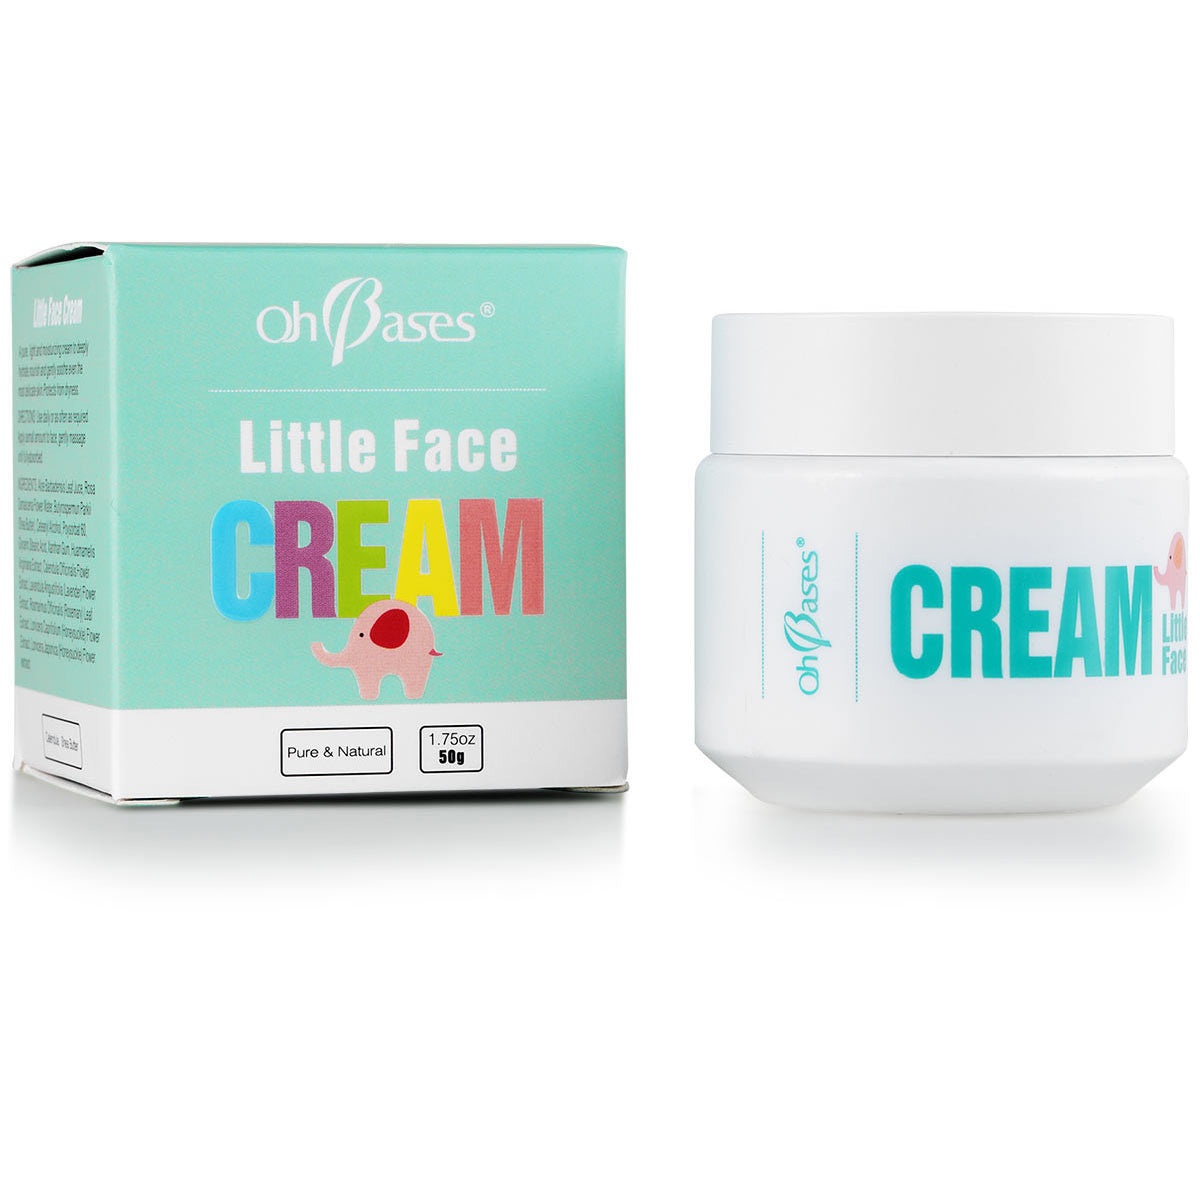 Little Face Cream - OhBases